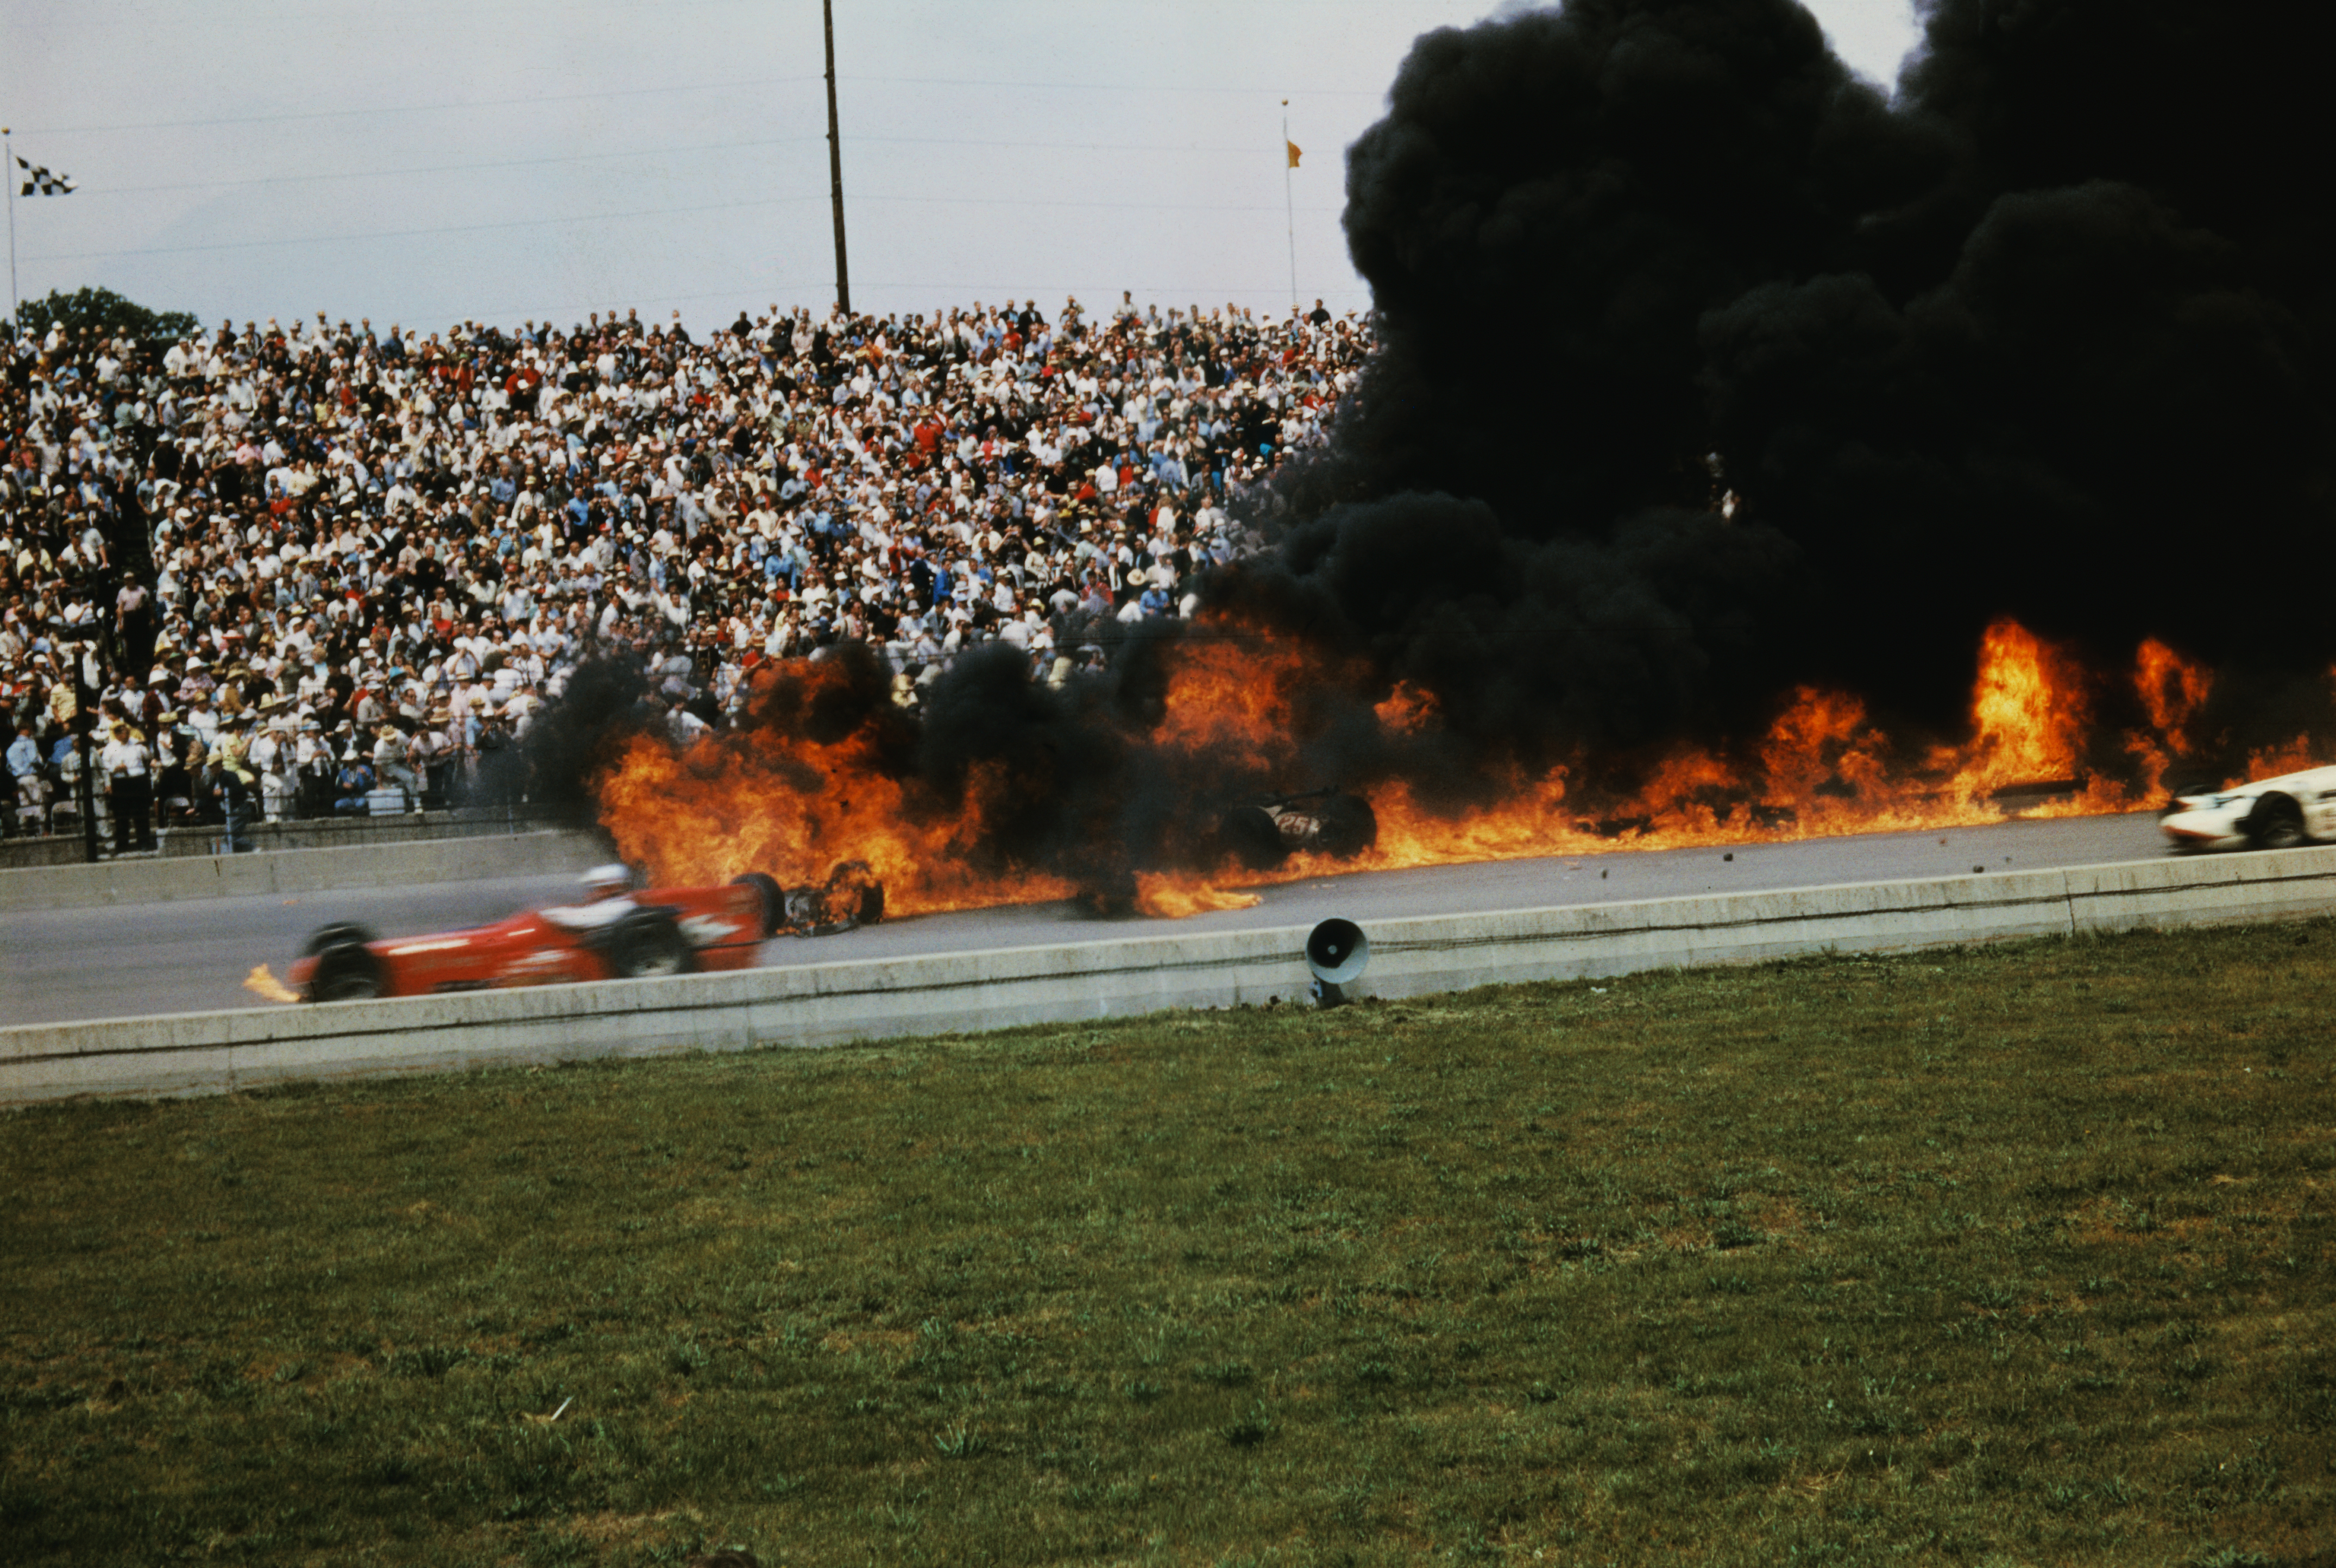 Indianapolis 500 1964 fatal crash involving Eddie Sachs and Dave MacDonald